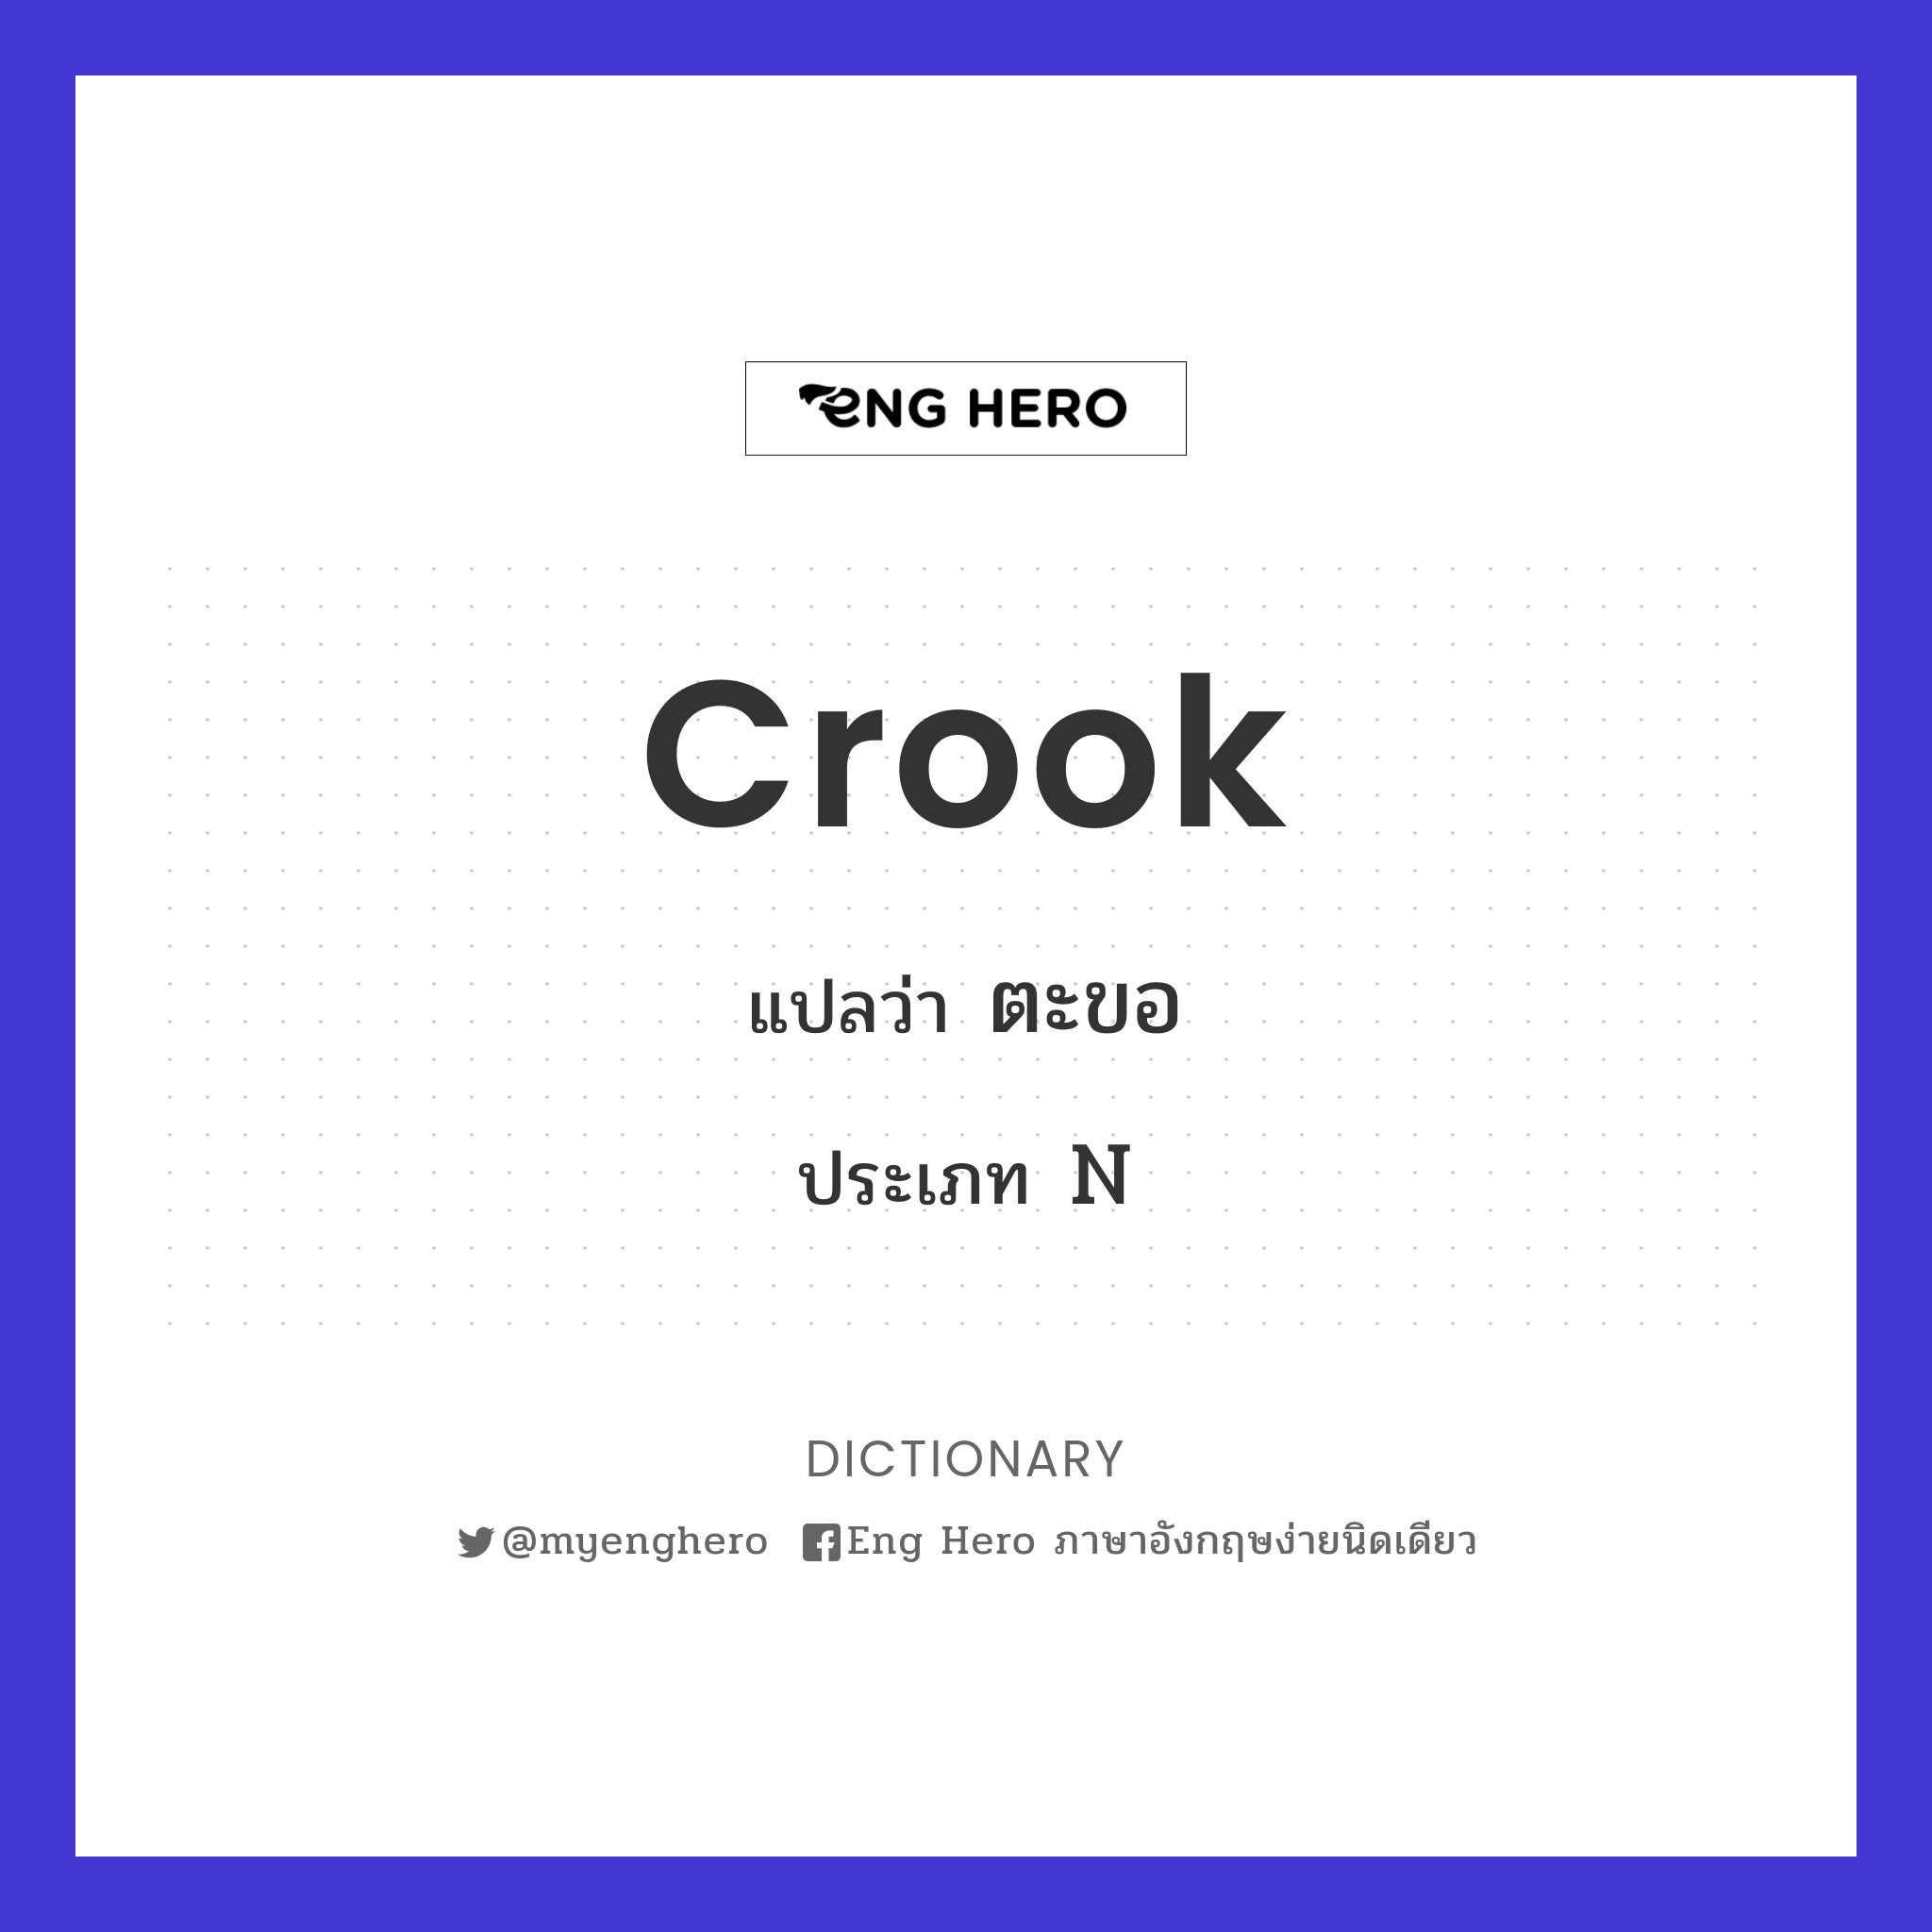 crook